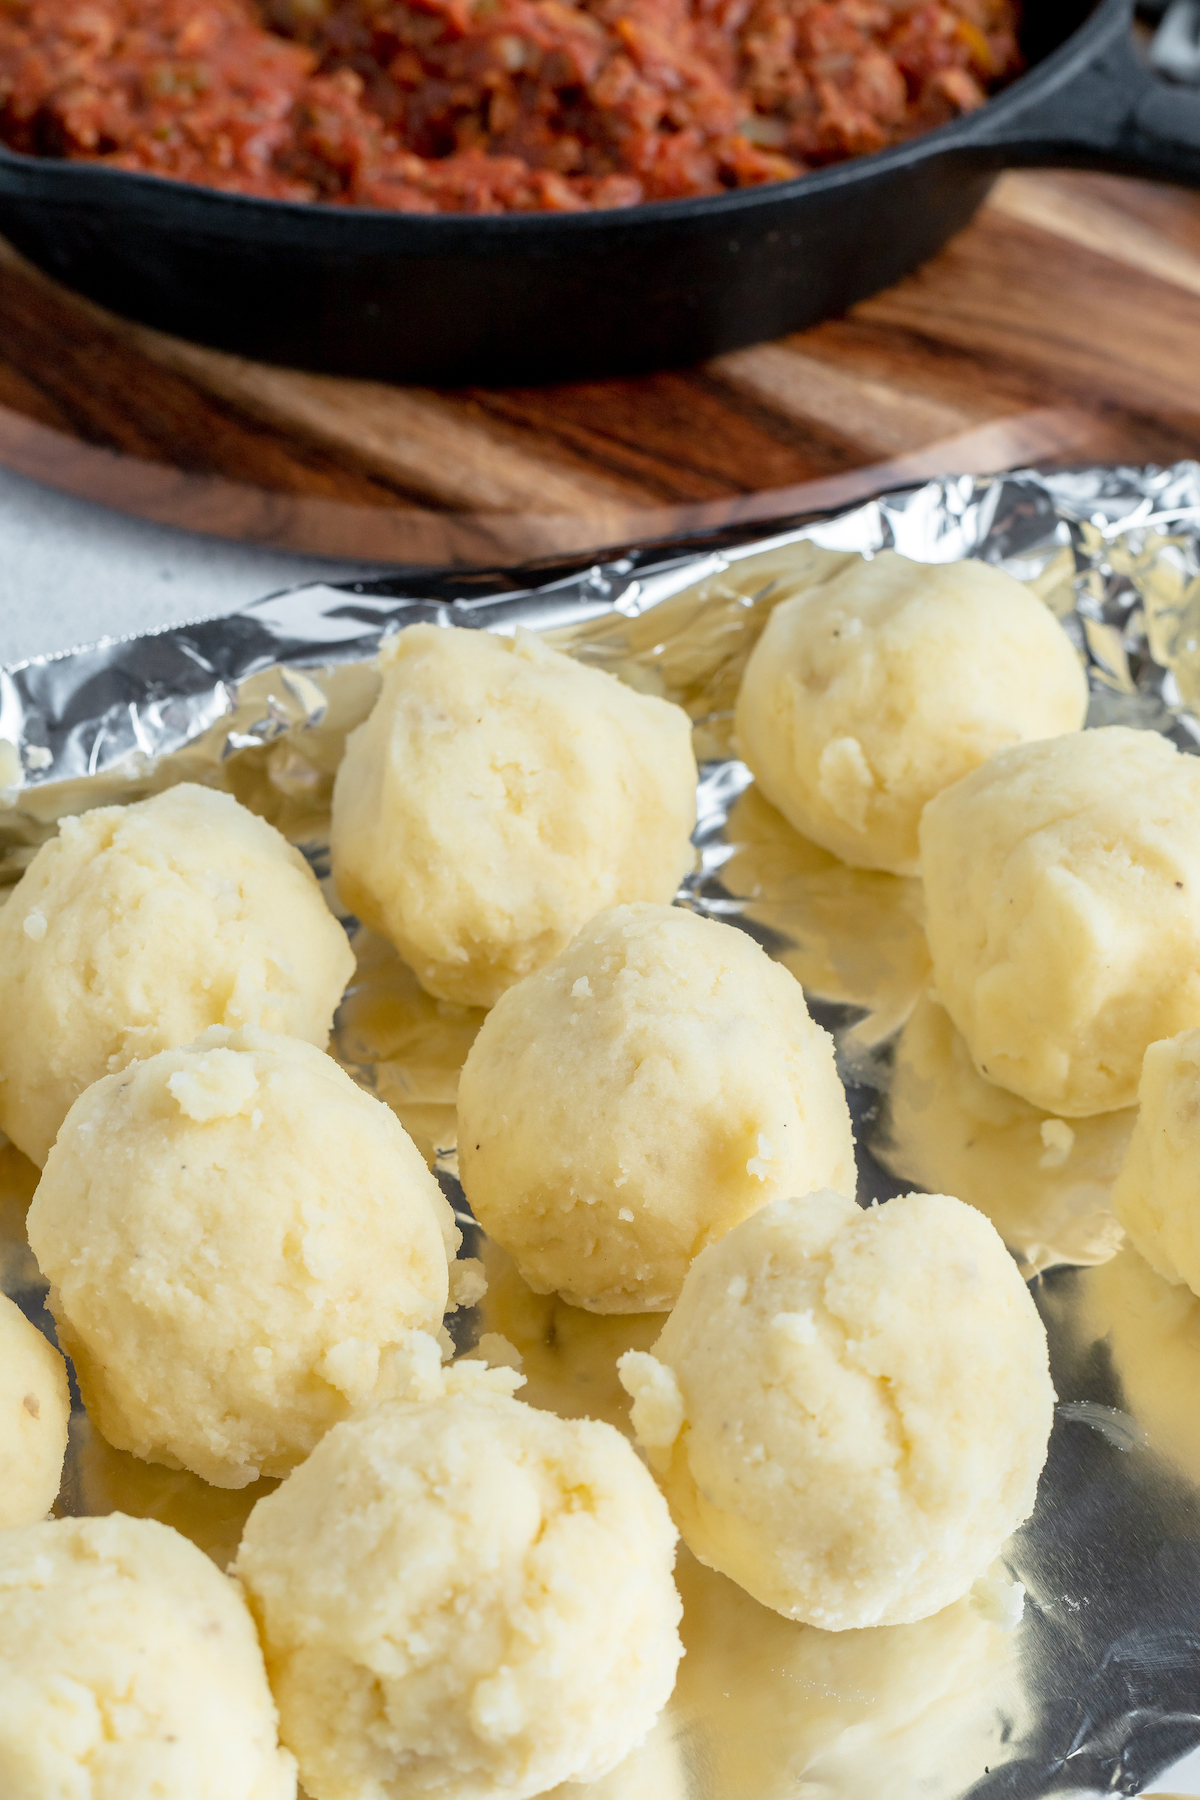 Balls of mashed potato on a foil-lined baking sheet.